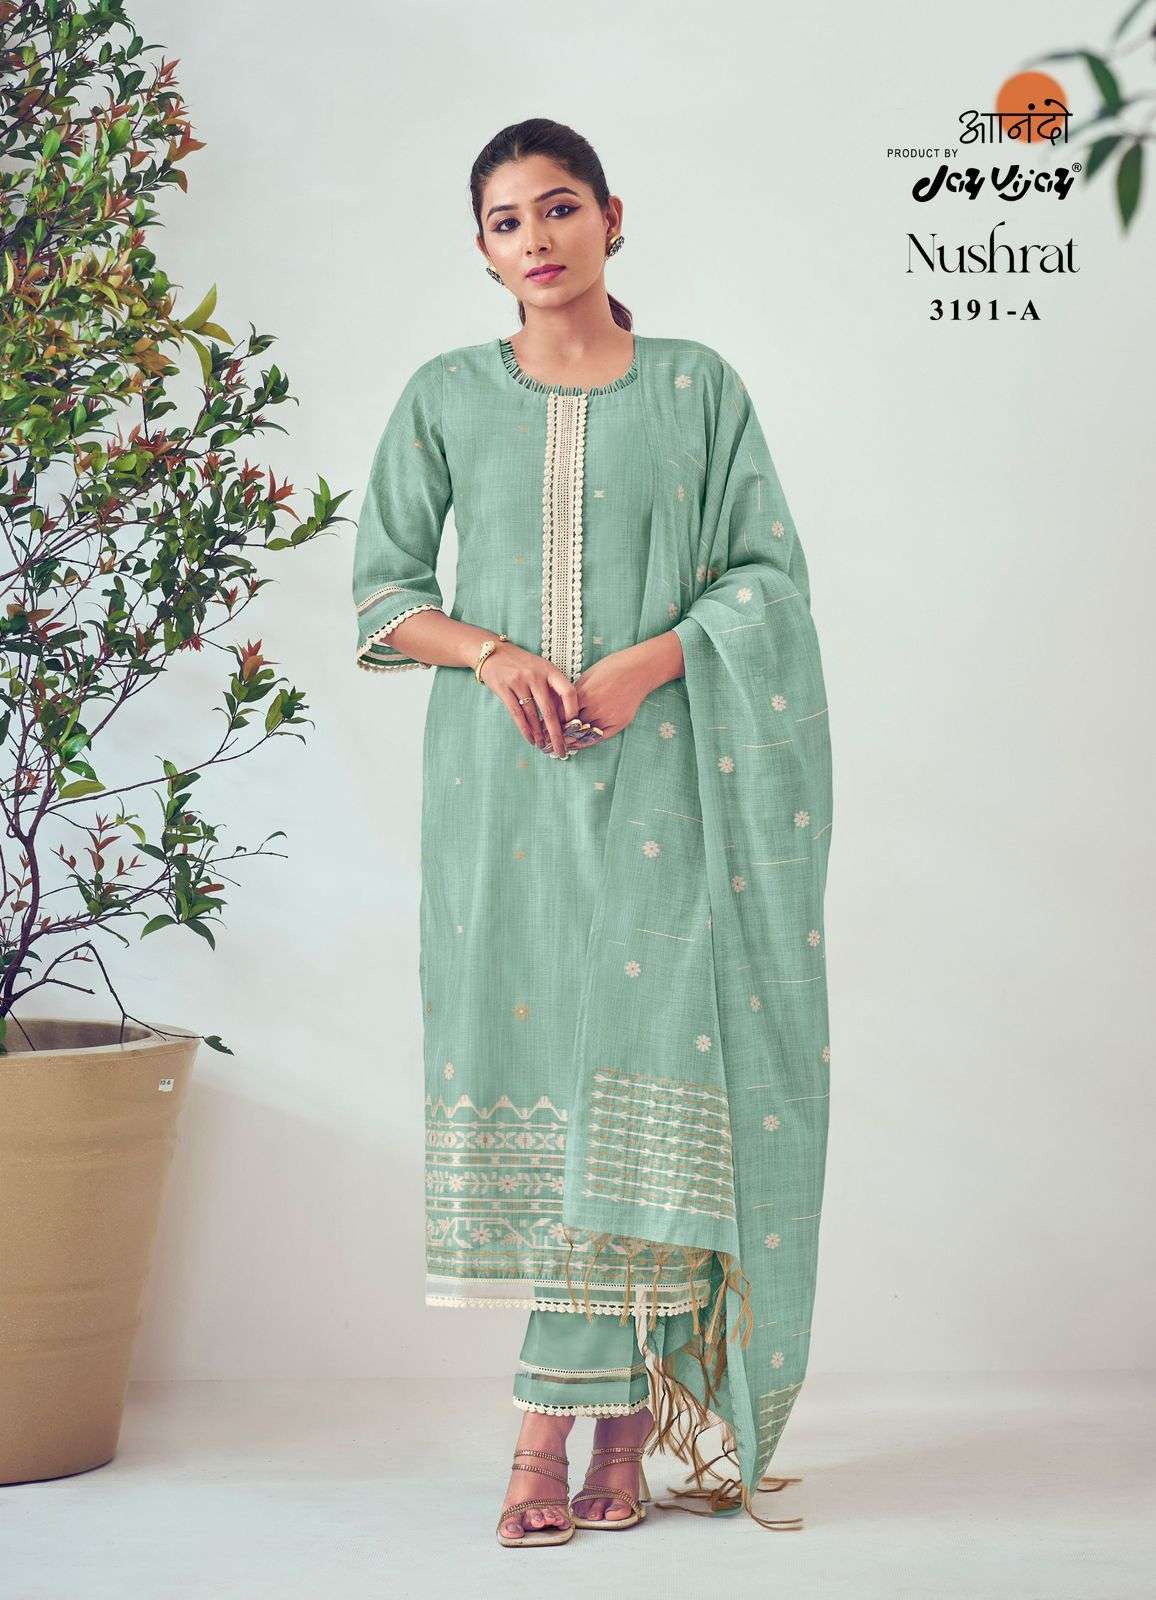 Jay Vijay Anando Nushrat 3191 Exclusive Cotton Dress Catalog Exporters